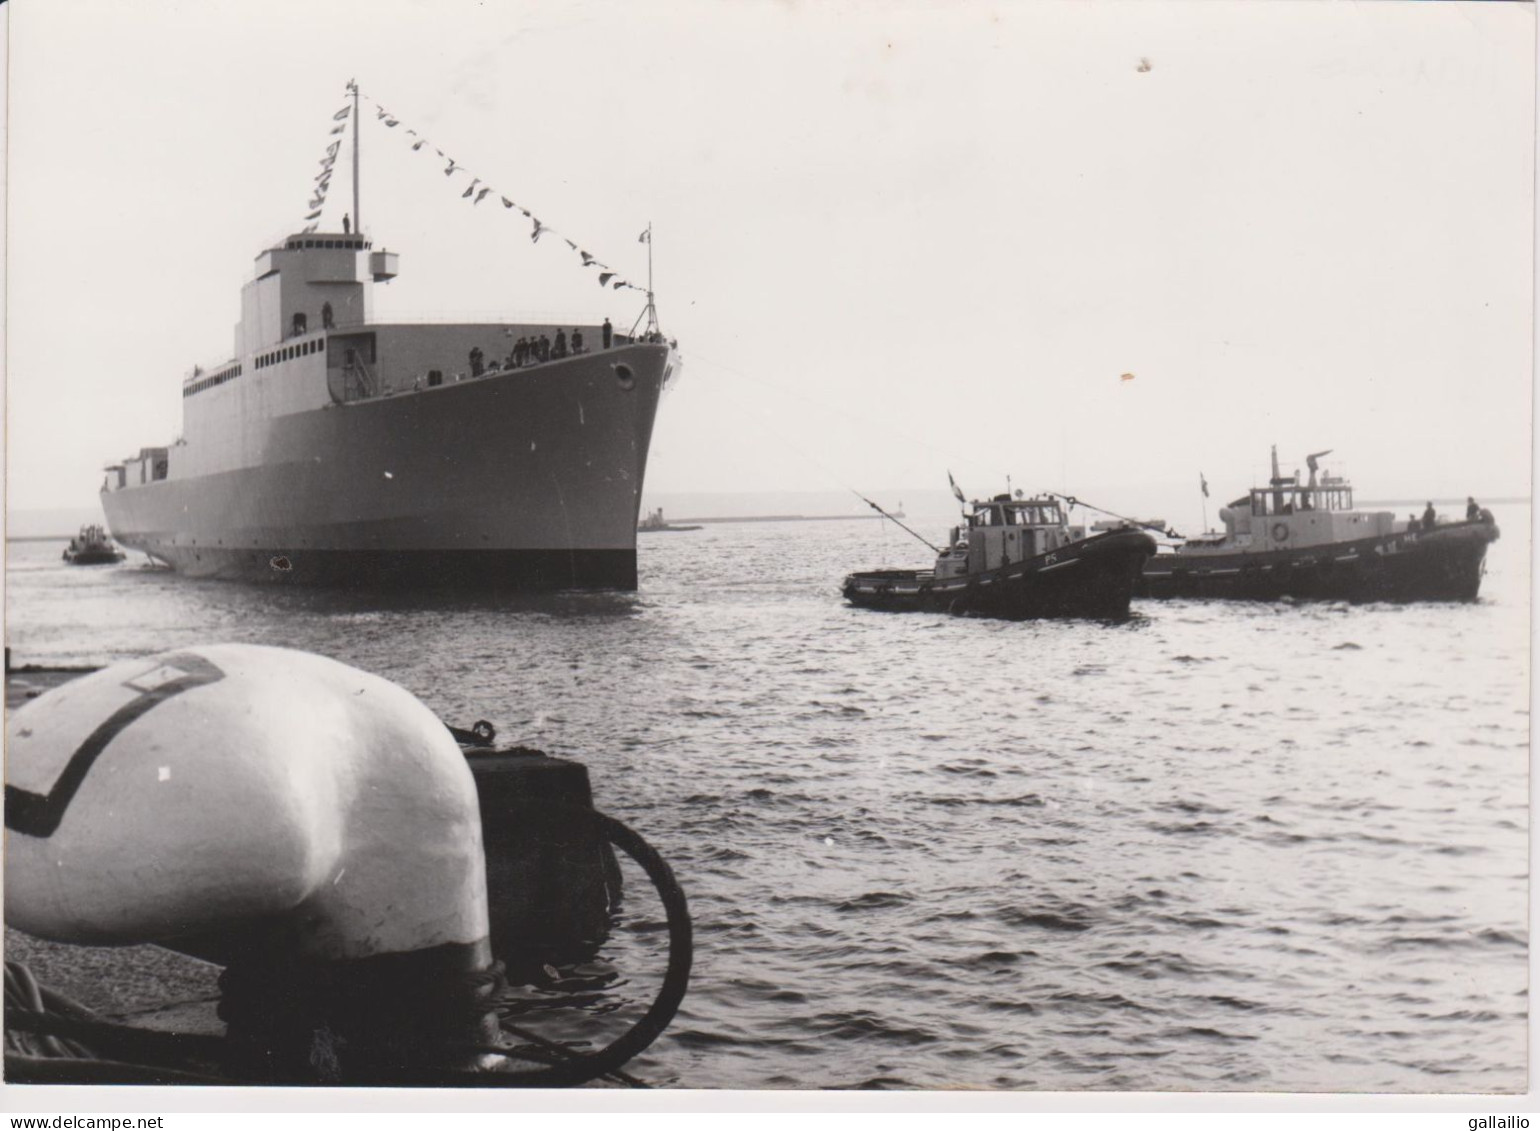 PHOTO PRESSE MISE A FLOT DE L'OURAGAN A BREST PHOTO A F P NOVEMBRE 1963 FORMAT 18 X 13 CMS - Barcos